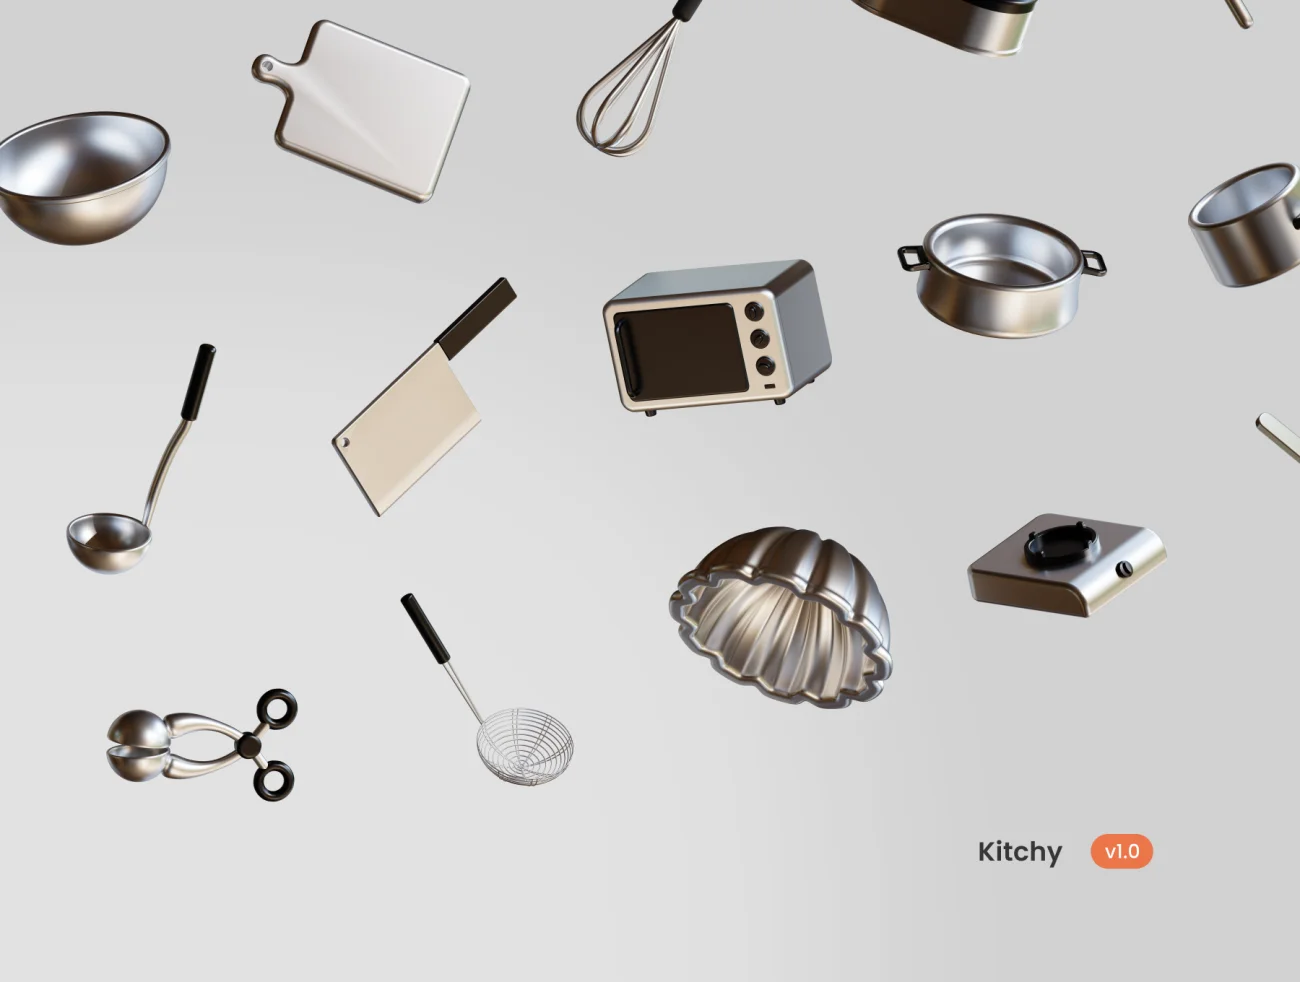 30款厨房炊具锅碗瓢盆3D图标合集 Kitchy – 3D Cooking ware Icons插图9